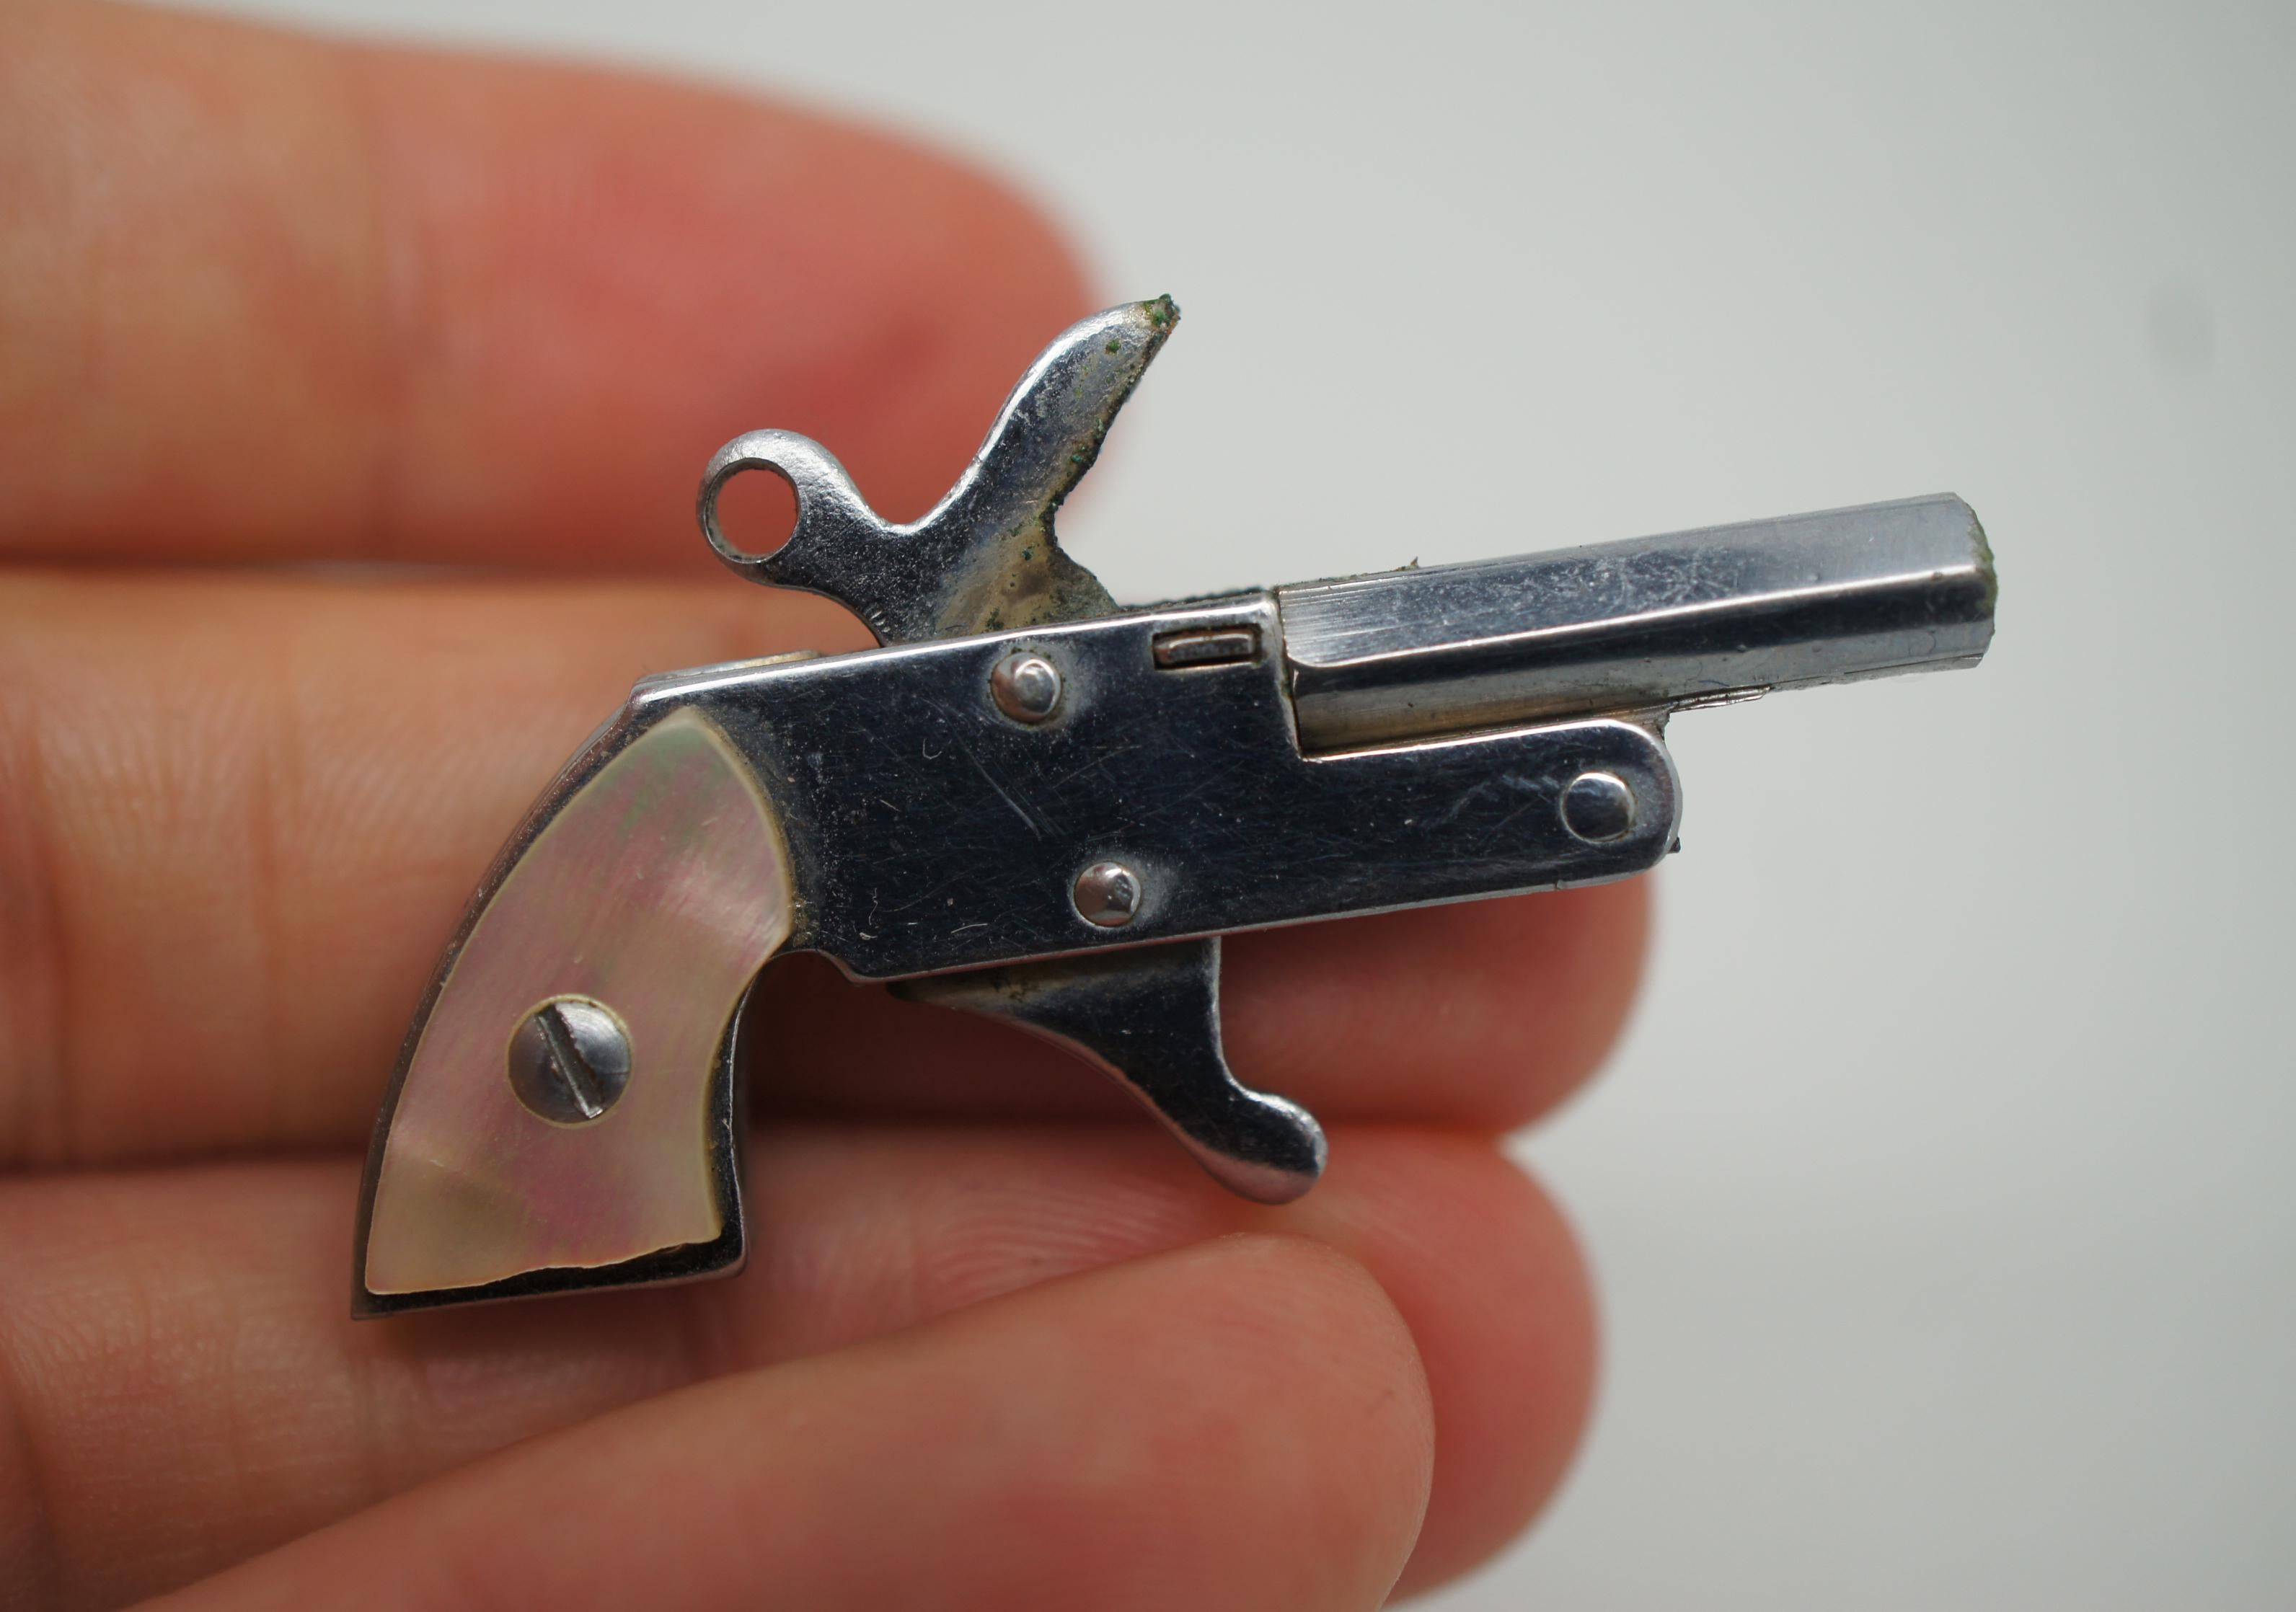 Metal 2 Miniature Mother of Pearl Toy Pin Fire Cap Gun Pistol Keychain Japan Watch Fob